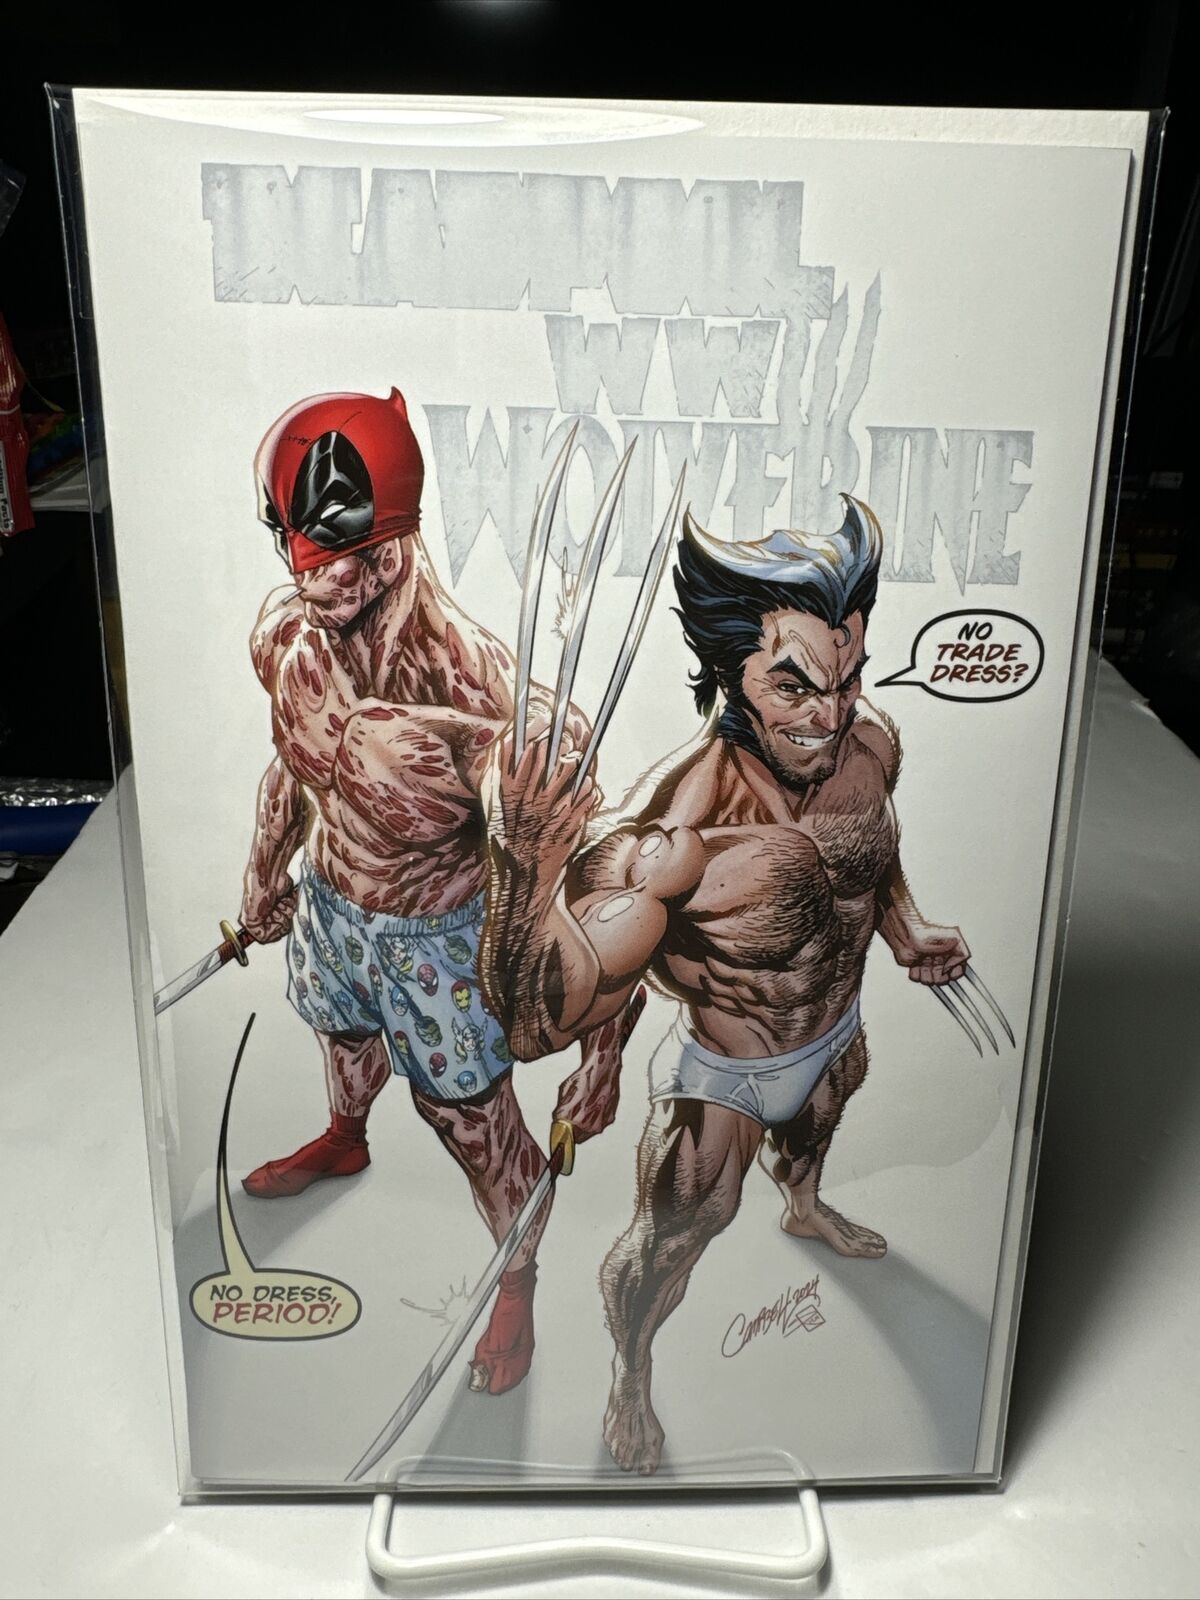 Deadpool & Wolverine: WWIII #1 - J. Scott Campbell Variant 2024